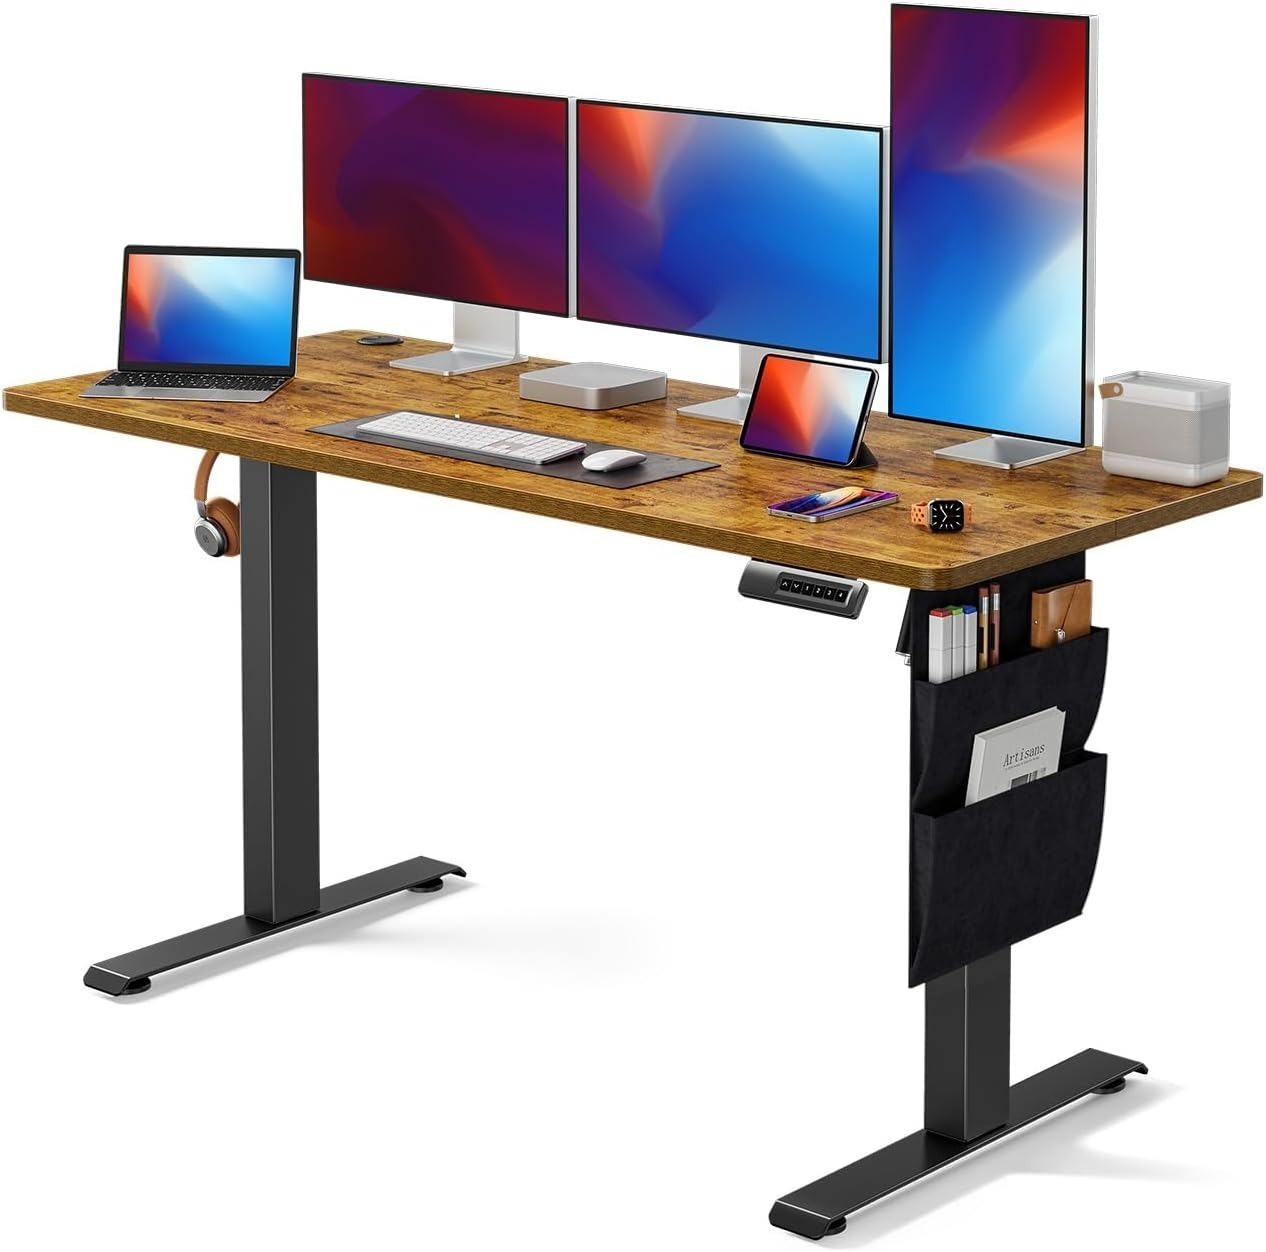 Marsail 55" x 24" Adjustable Height Electric Standing Desk w/ Storage $130 + FS